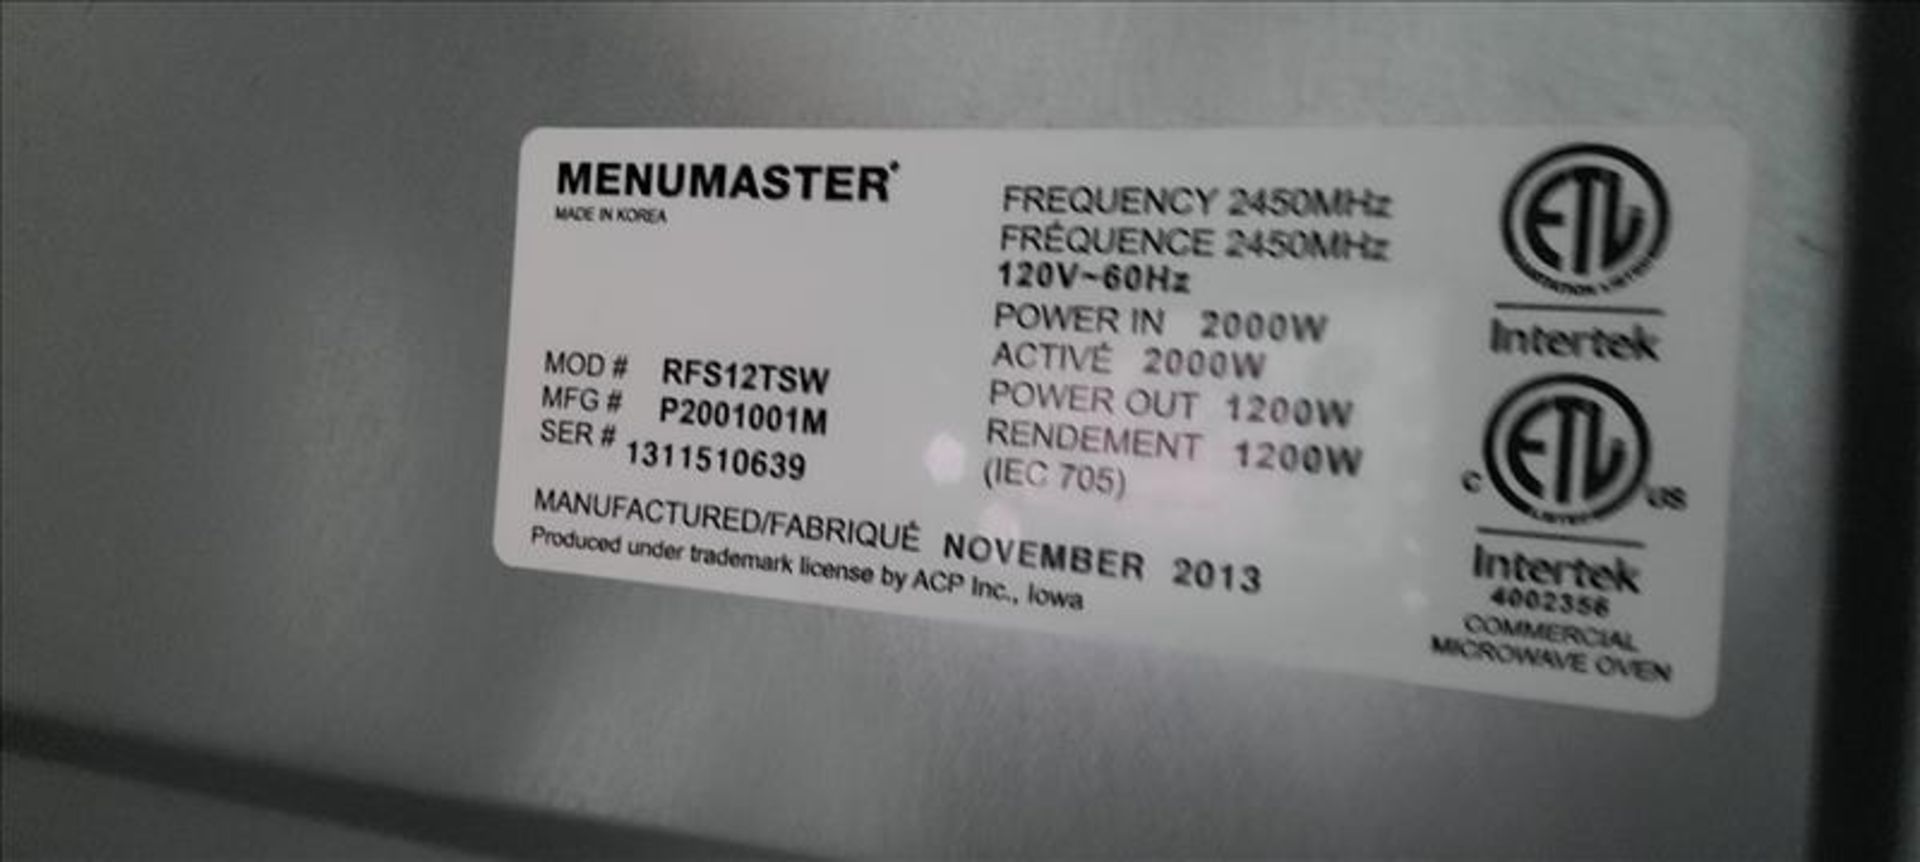 Menumaster Commercial Microwave, mod. RFS12TSW, ser. no. 1311510639, 120 volts, 60 Hz [Loc. - Image 5 of 6